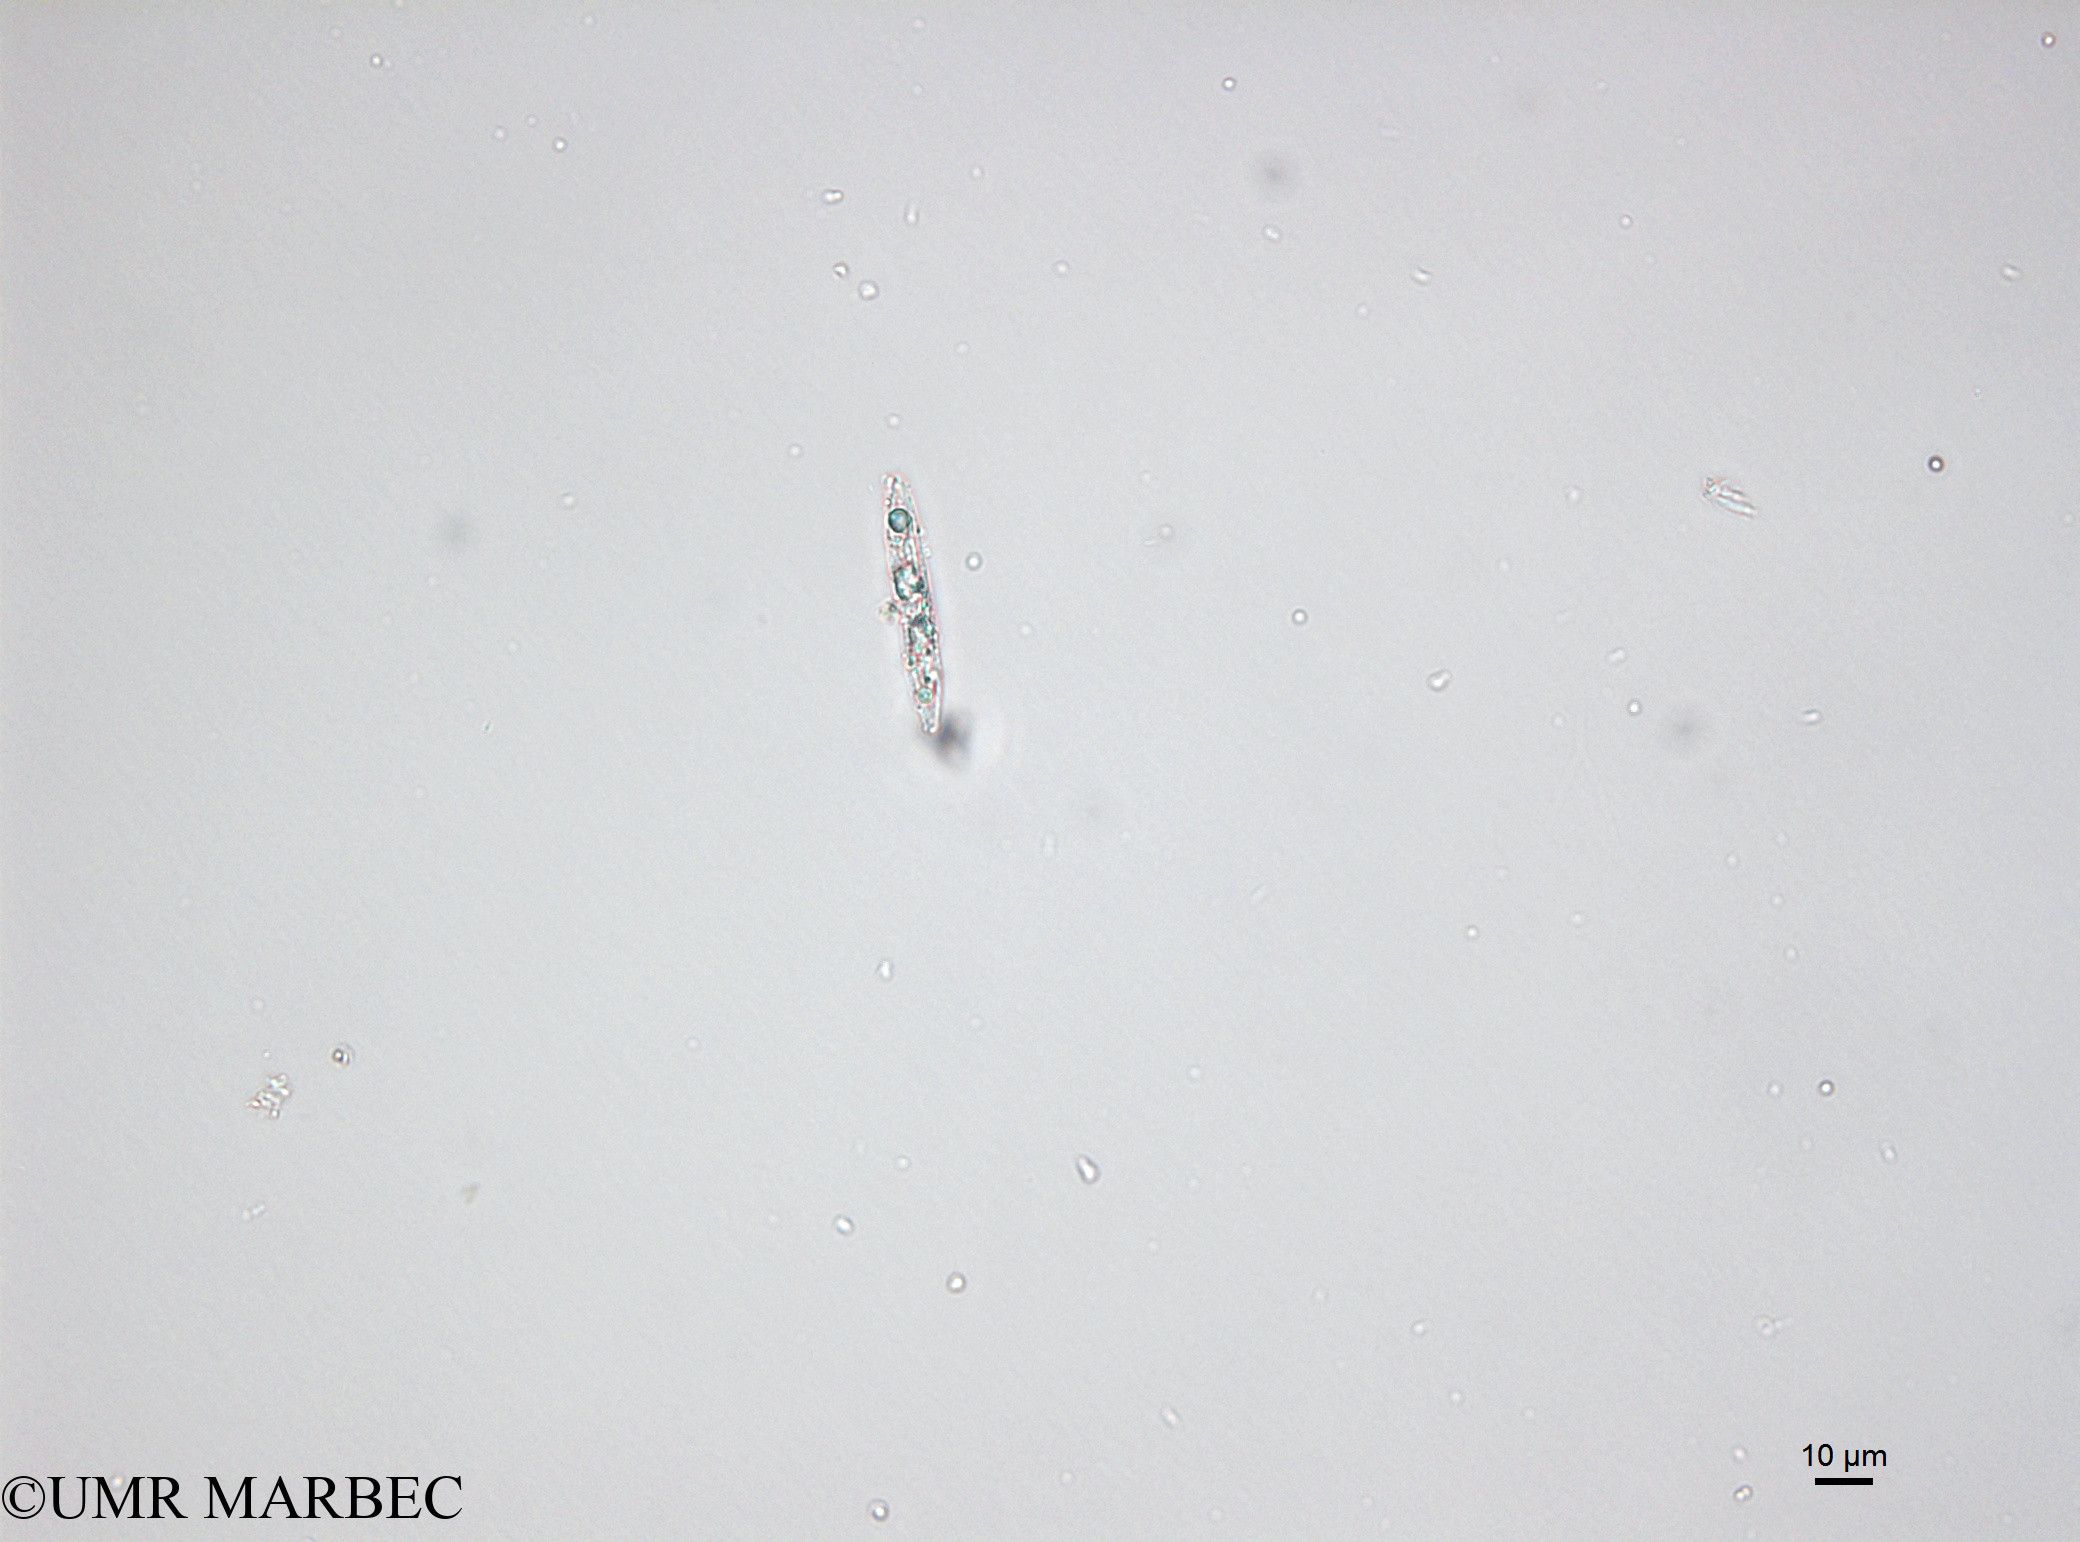 phyto/Bizerte/bizerte_lagoon/RISCO April 2014/Cymatopleura sp1 (150403_001_ovl-3).tif(copy).jpg